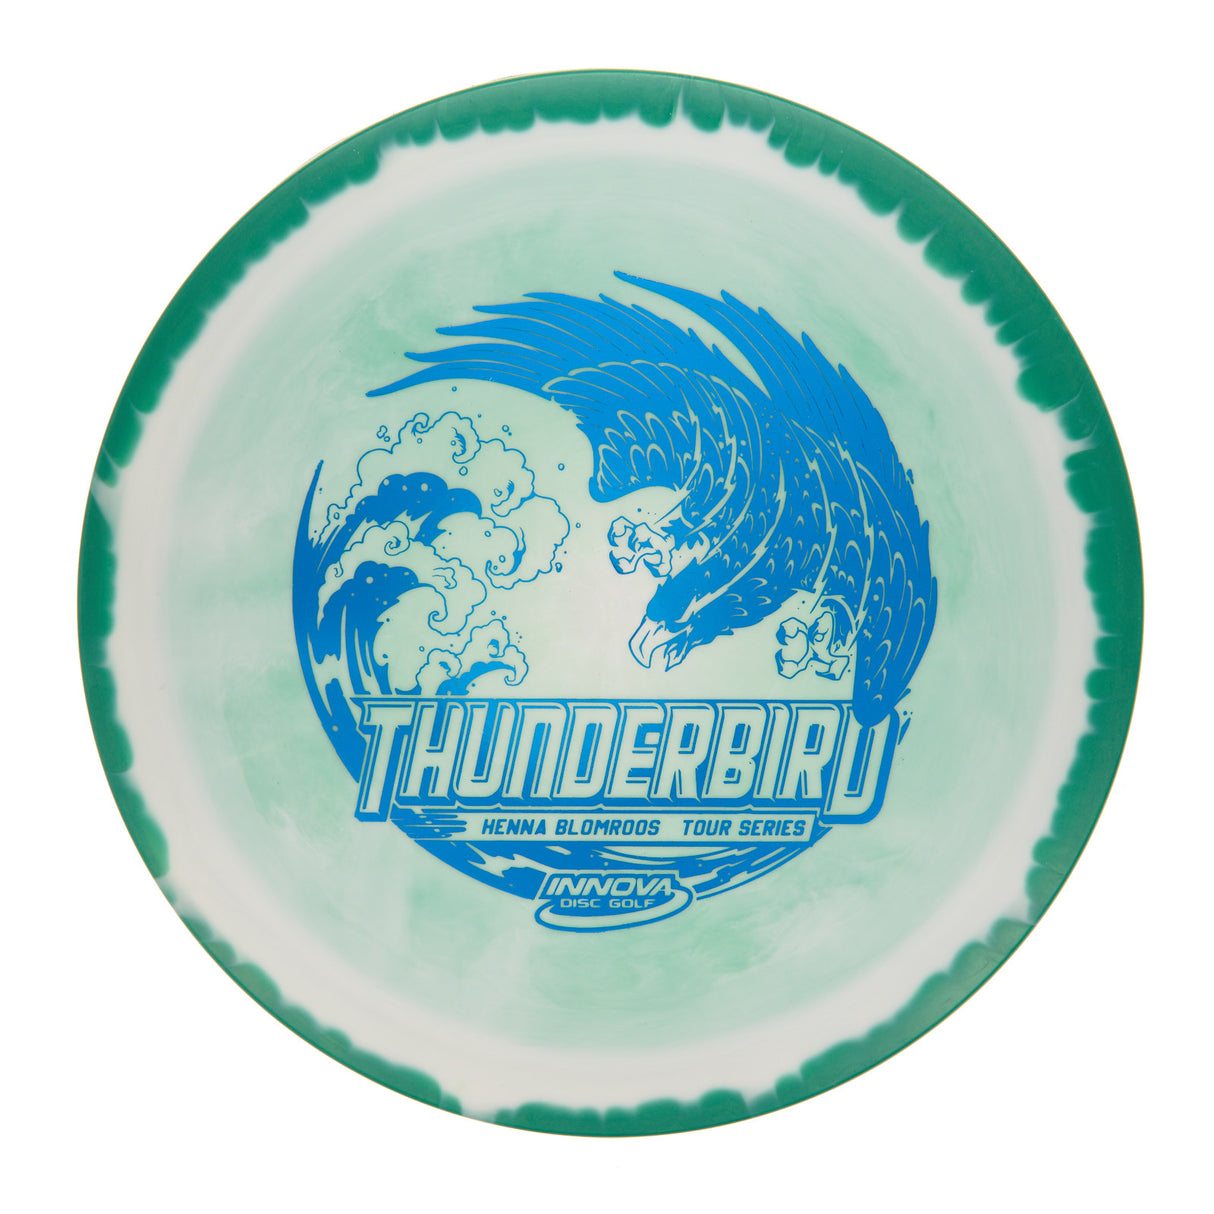 Innova Thunderbird - Henna Blomroos Tour Series Halo Star 175g | Style 0008